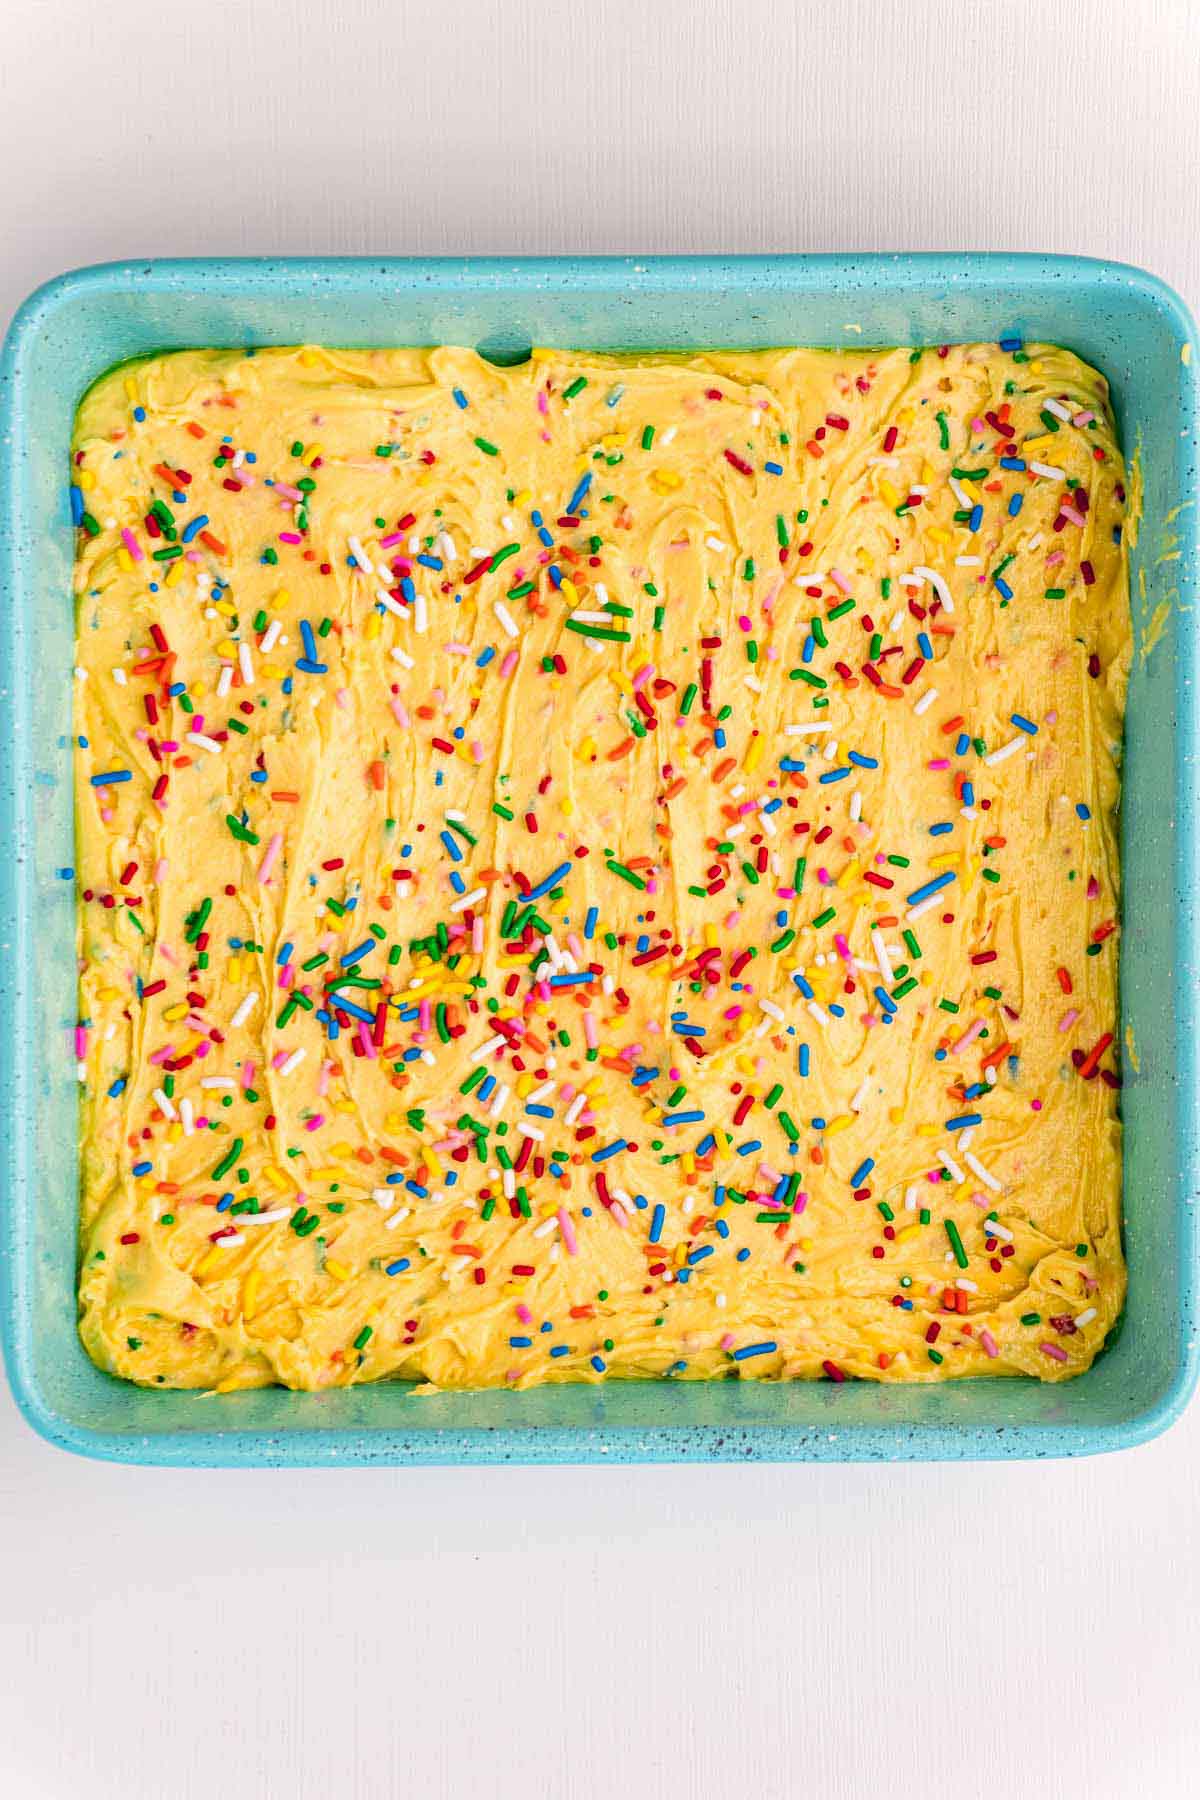 unbaked birthday cake blondies batter in a pan